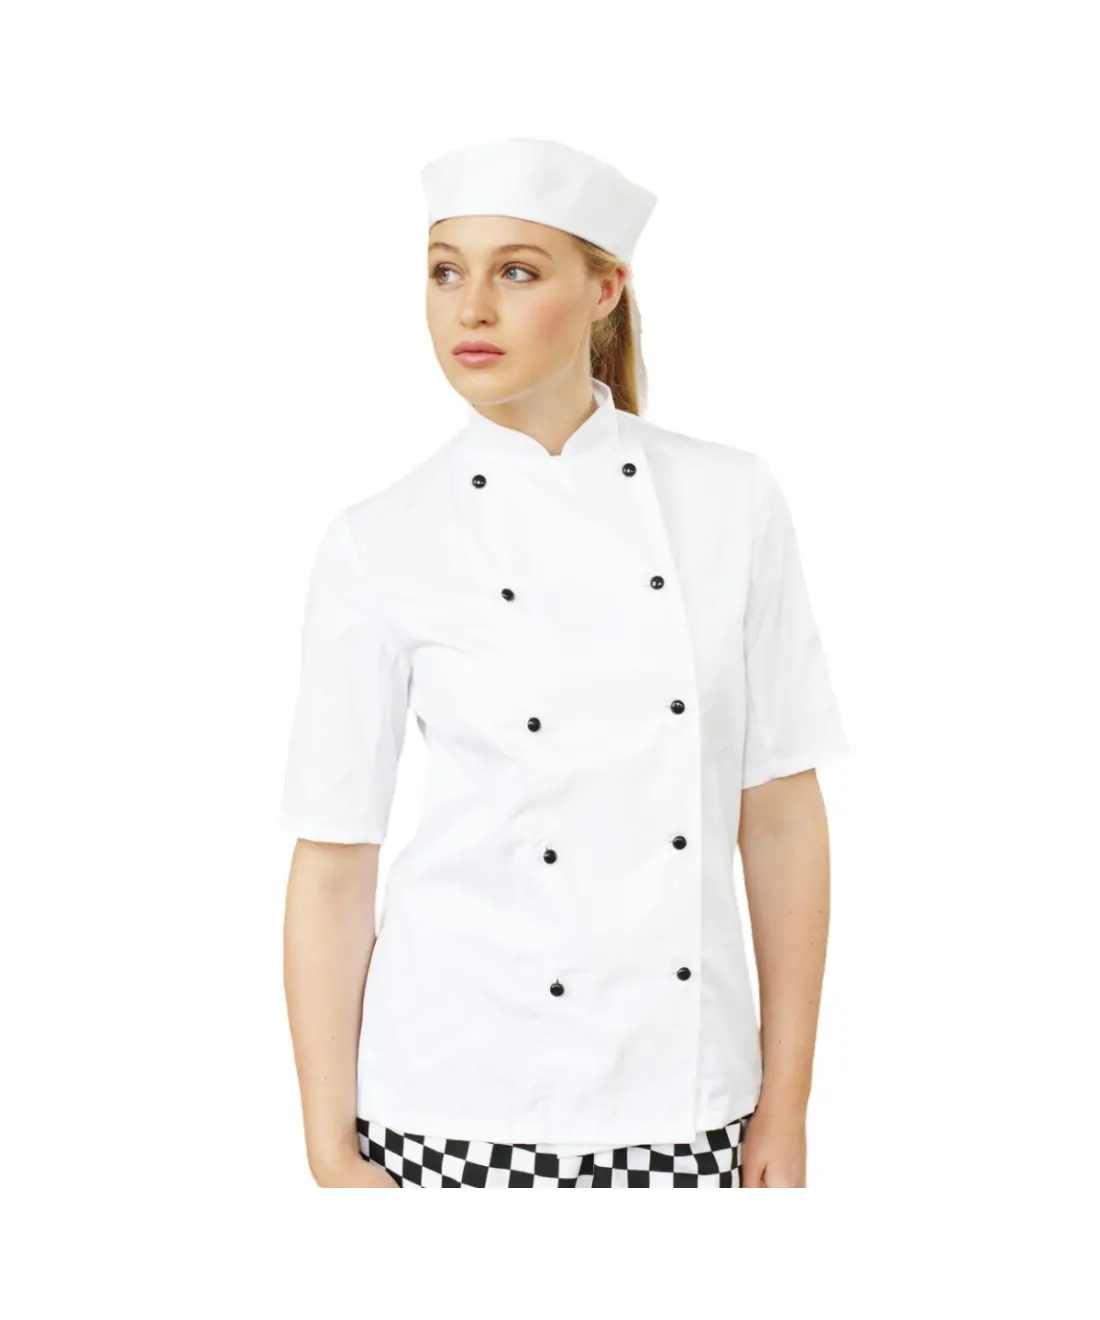 JP-RU-K2 professional modern white Lightweight Short Sleeve Chefs Jacket for women